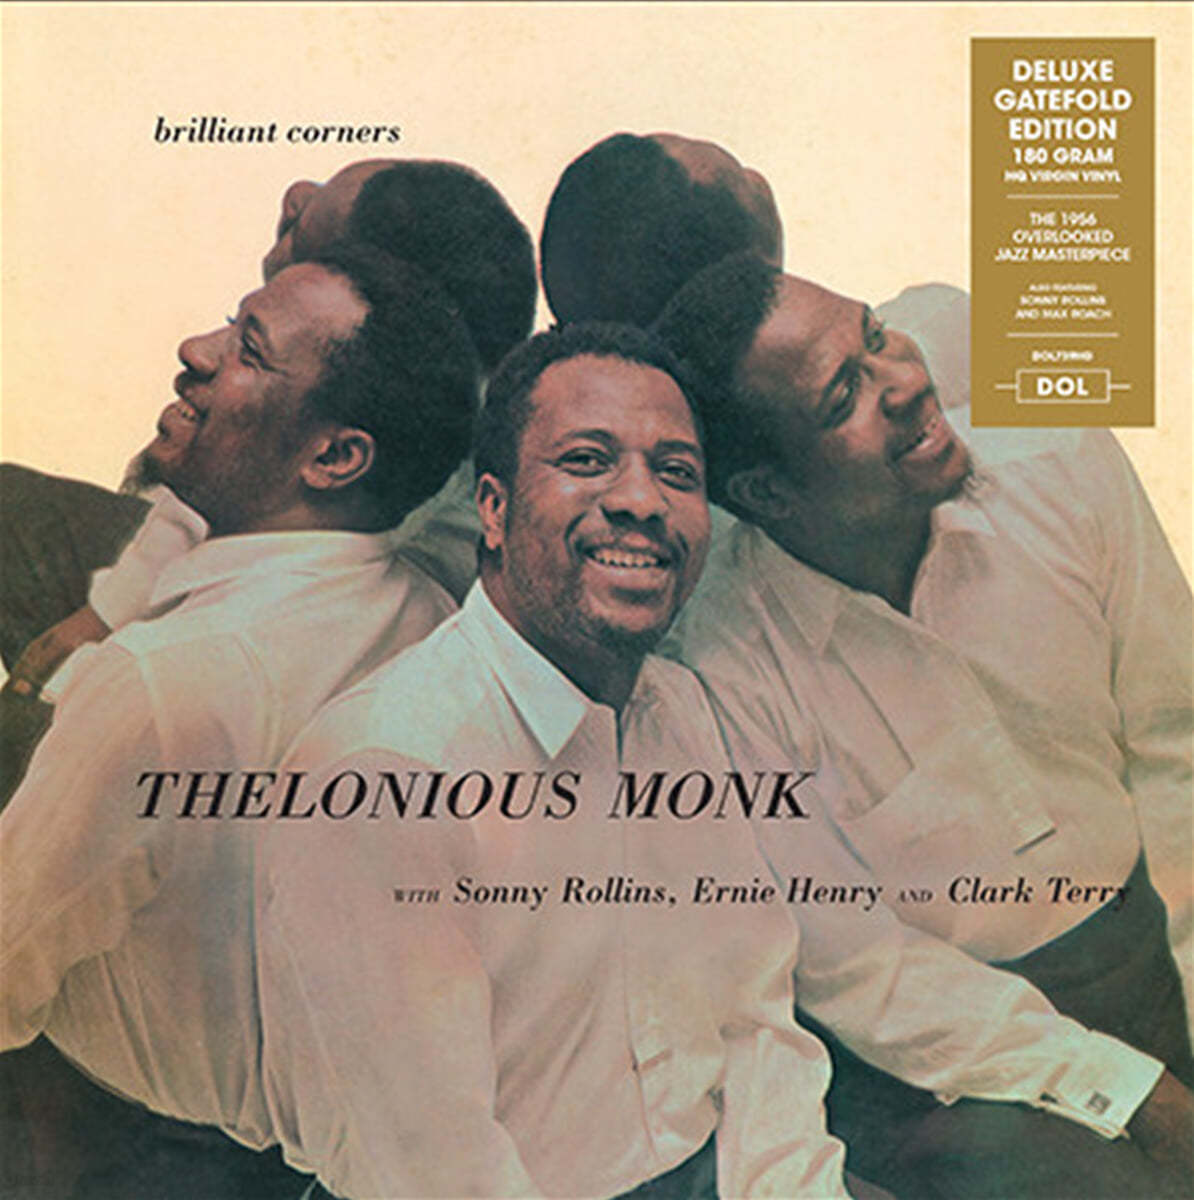 Thelonious Monk (델로니어스 몽크) - Brilliant Corners [블루 컬러 LP] 